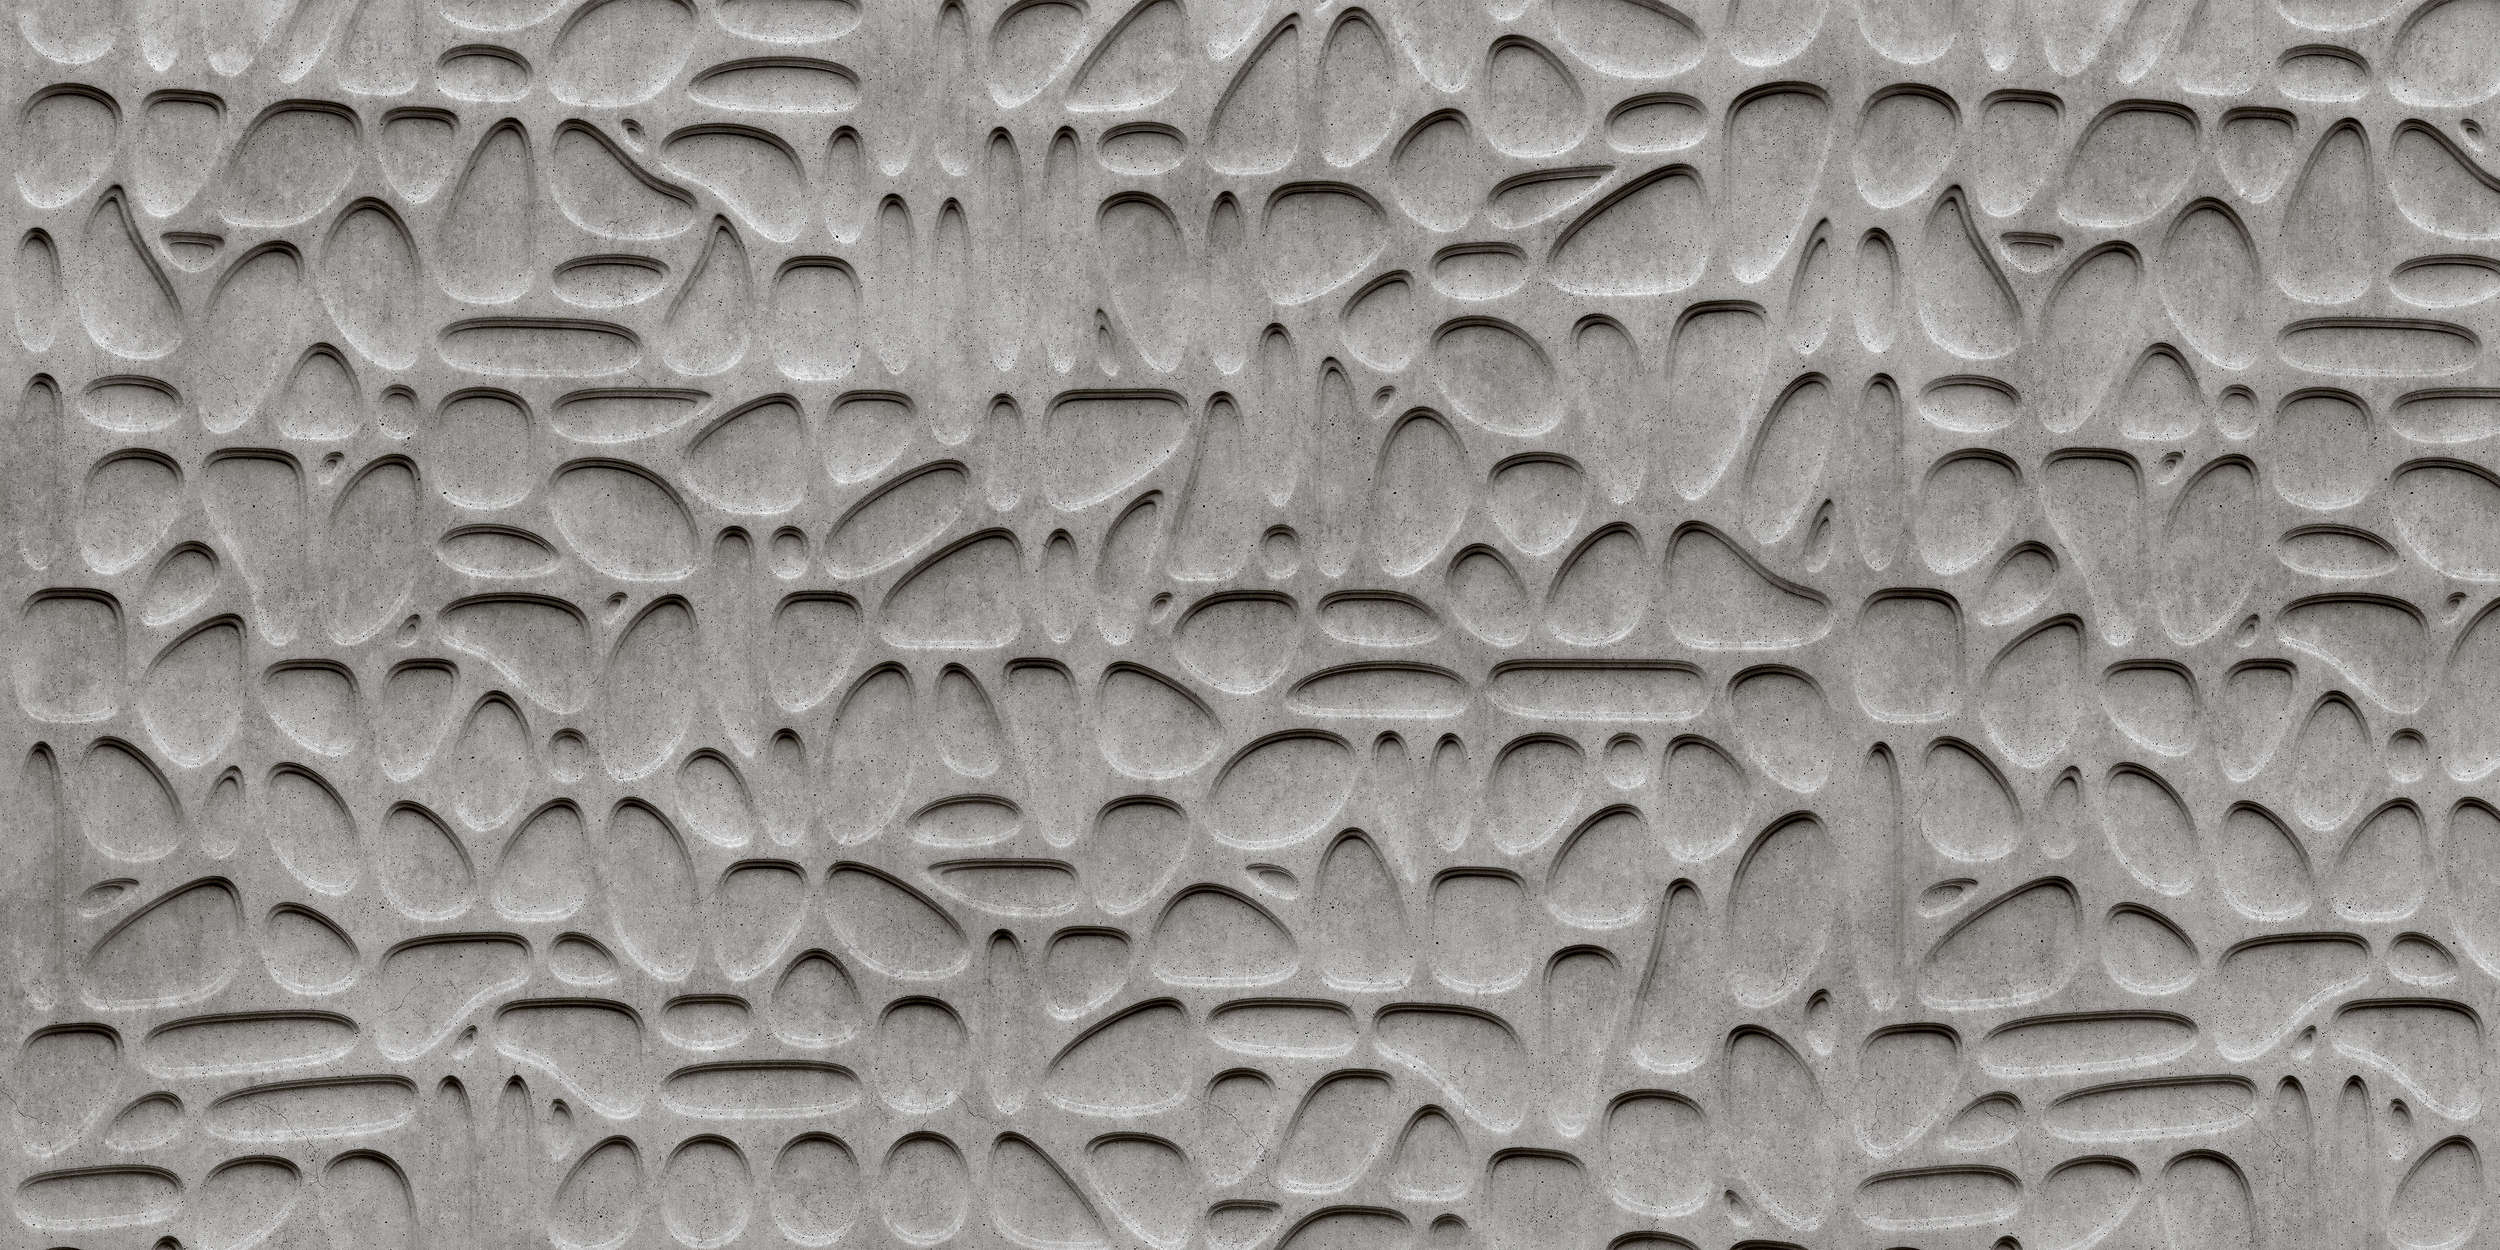             Maze 1 - Cool 3D Concrete Bubbles Onderlaag behang - Grijs, Zwart | Premium Smooth Vliesbehang
        